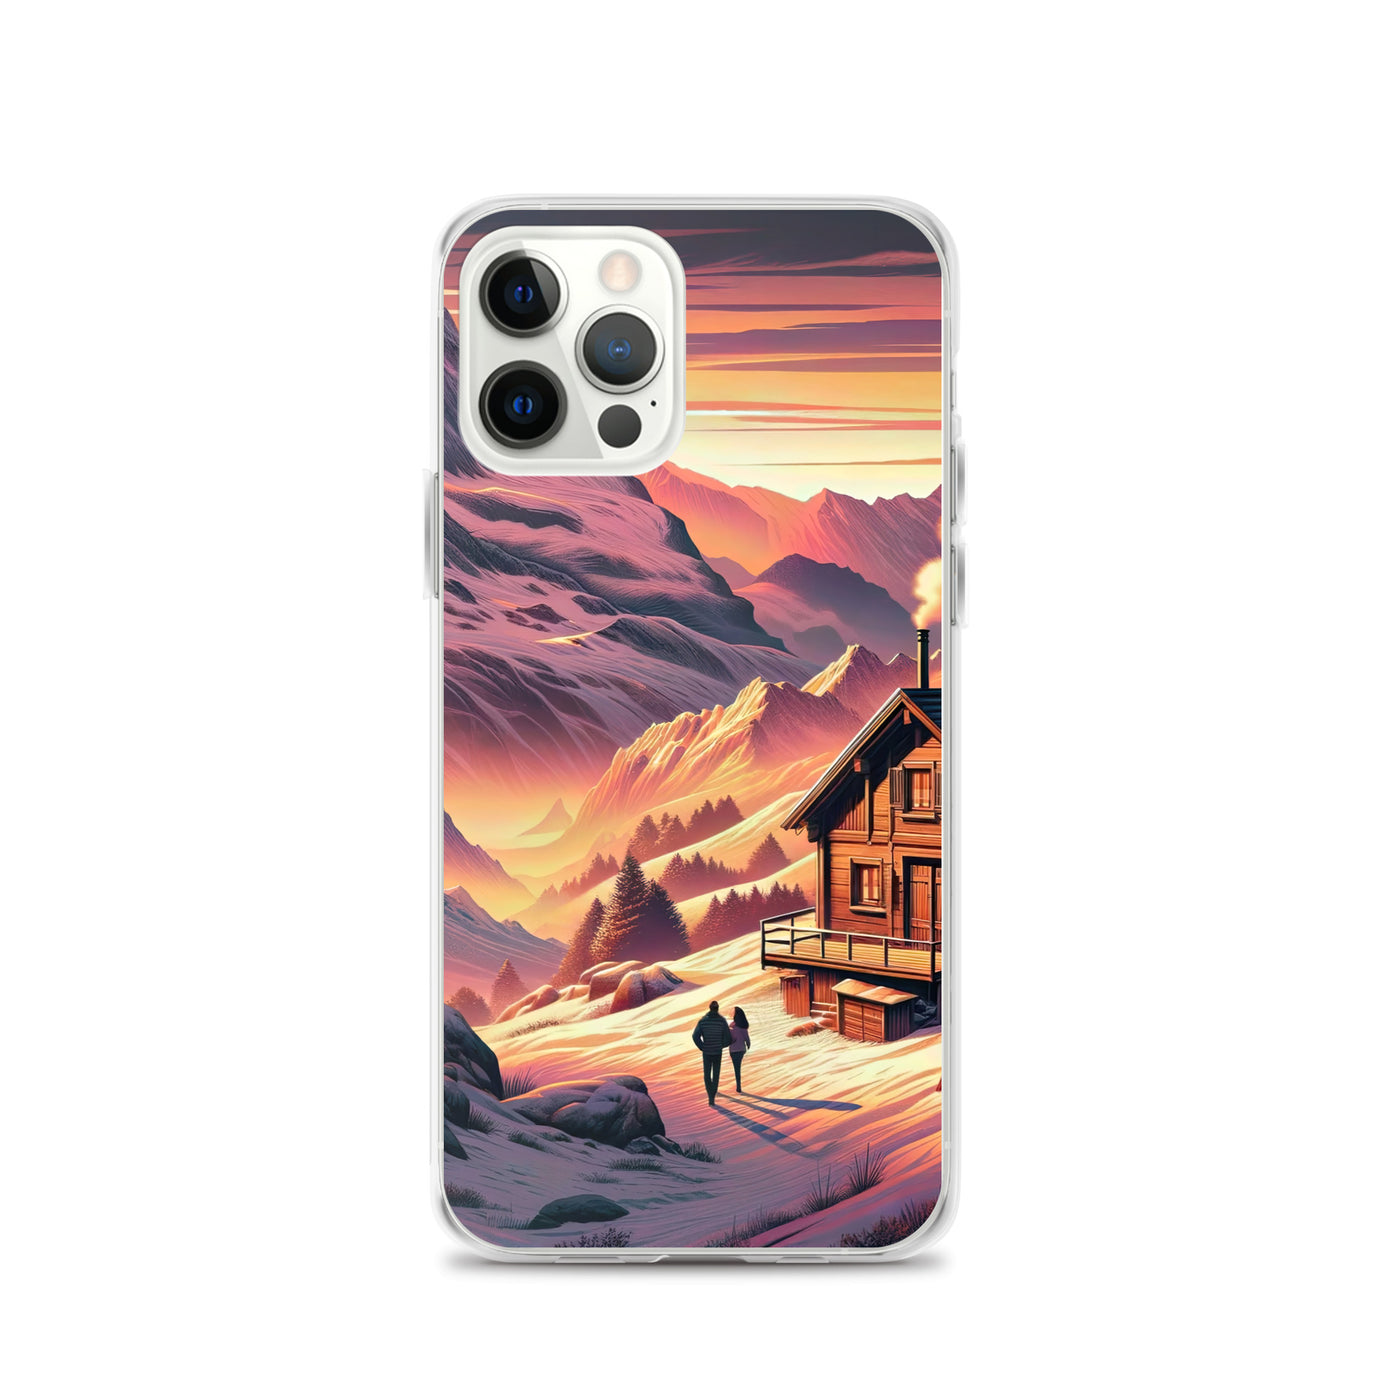 Berghütte im goldenen Sonnenuntergang: Digitale Alpenillustration - iPhone Schutzhülle (durchsichtig) berge xxx yyy zzz iPhone 12 Pro